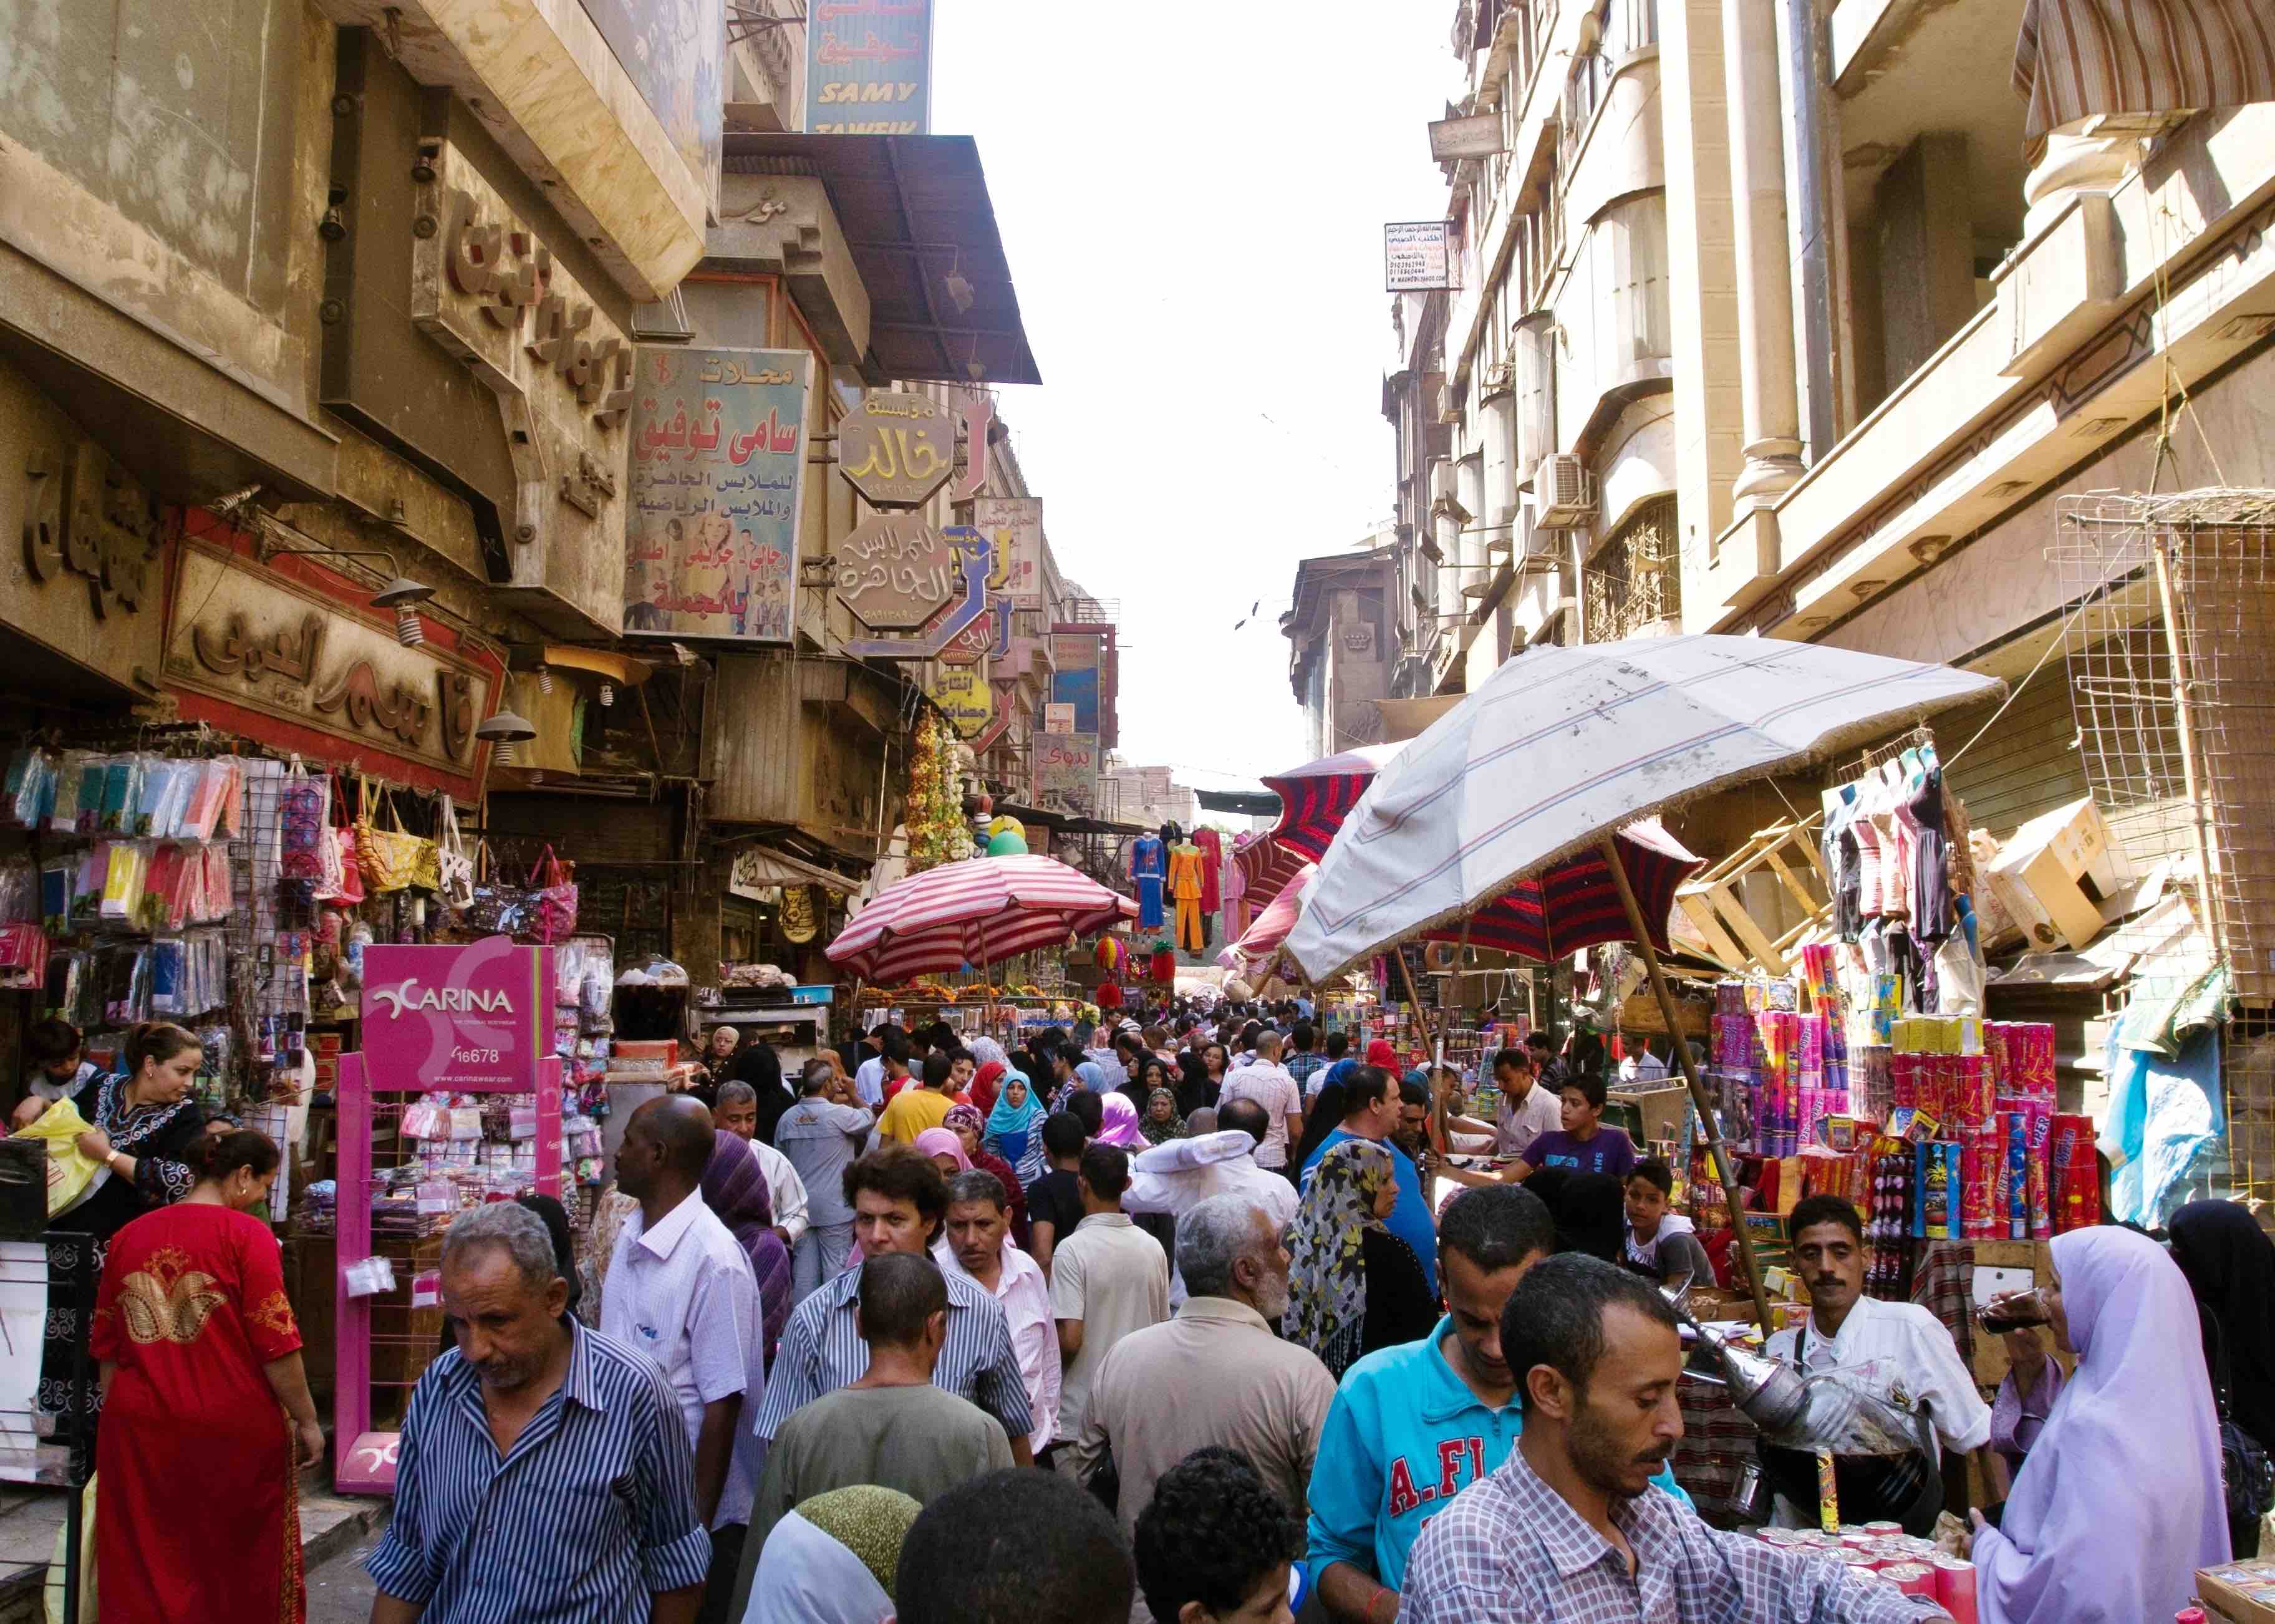  Cairo Entrepreneurship: Markets & People (Part 3)